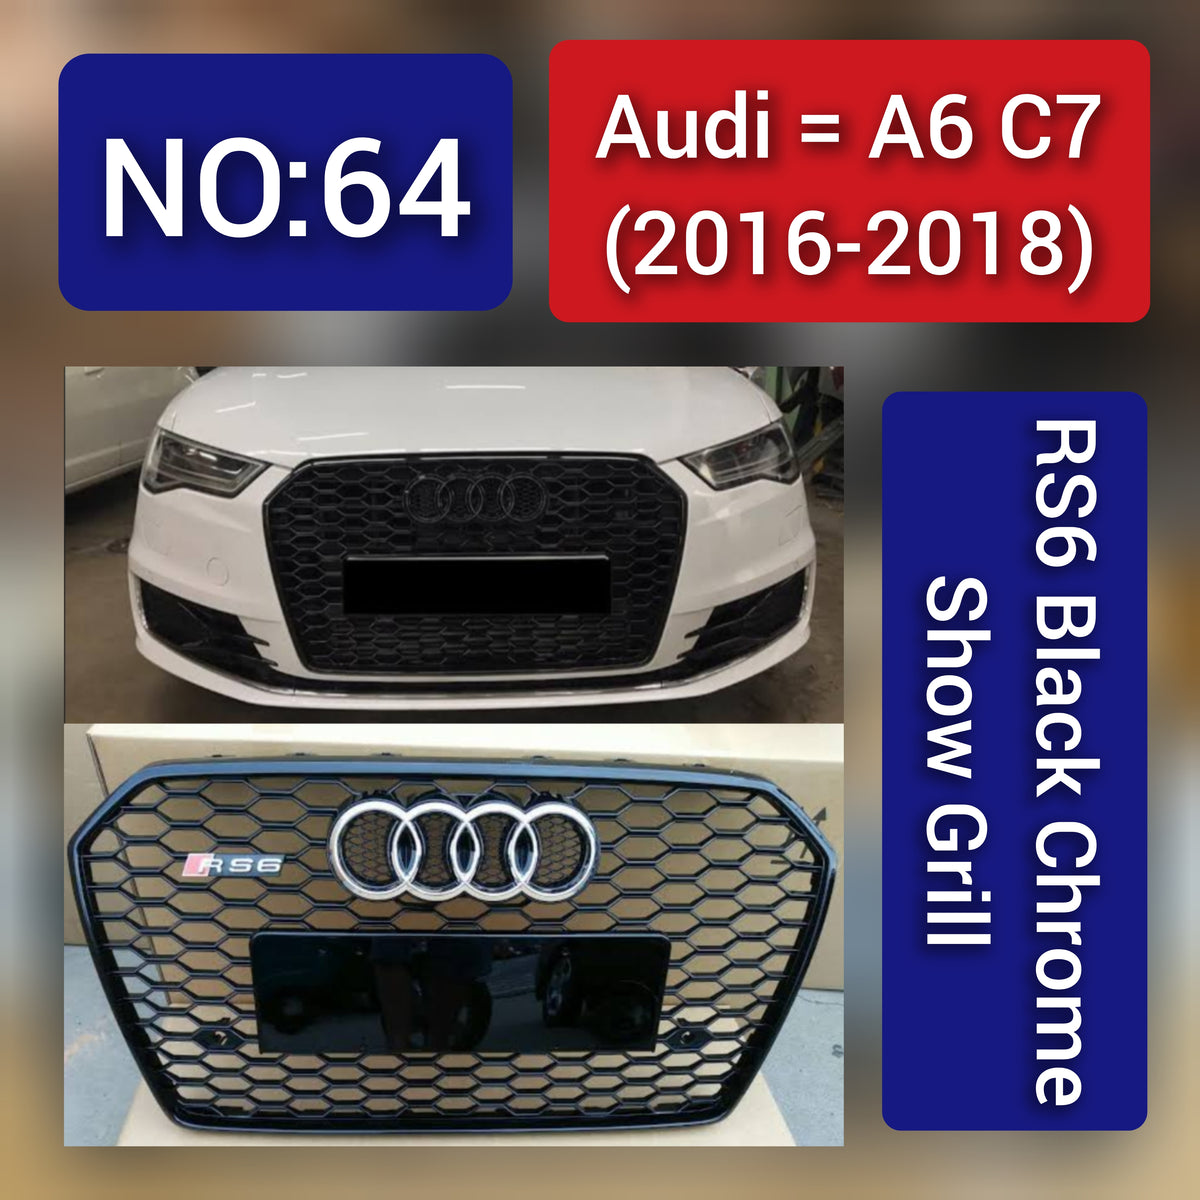 Audi A6 C7 Facelift(2016-18) RS6 Black Chrome Show Grill